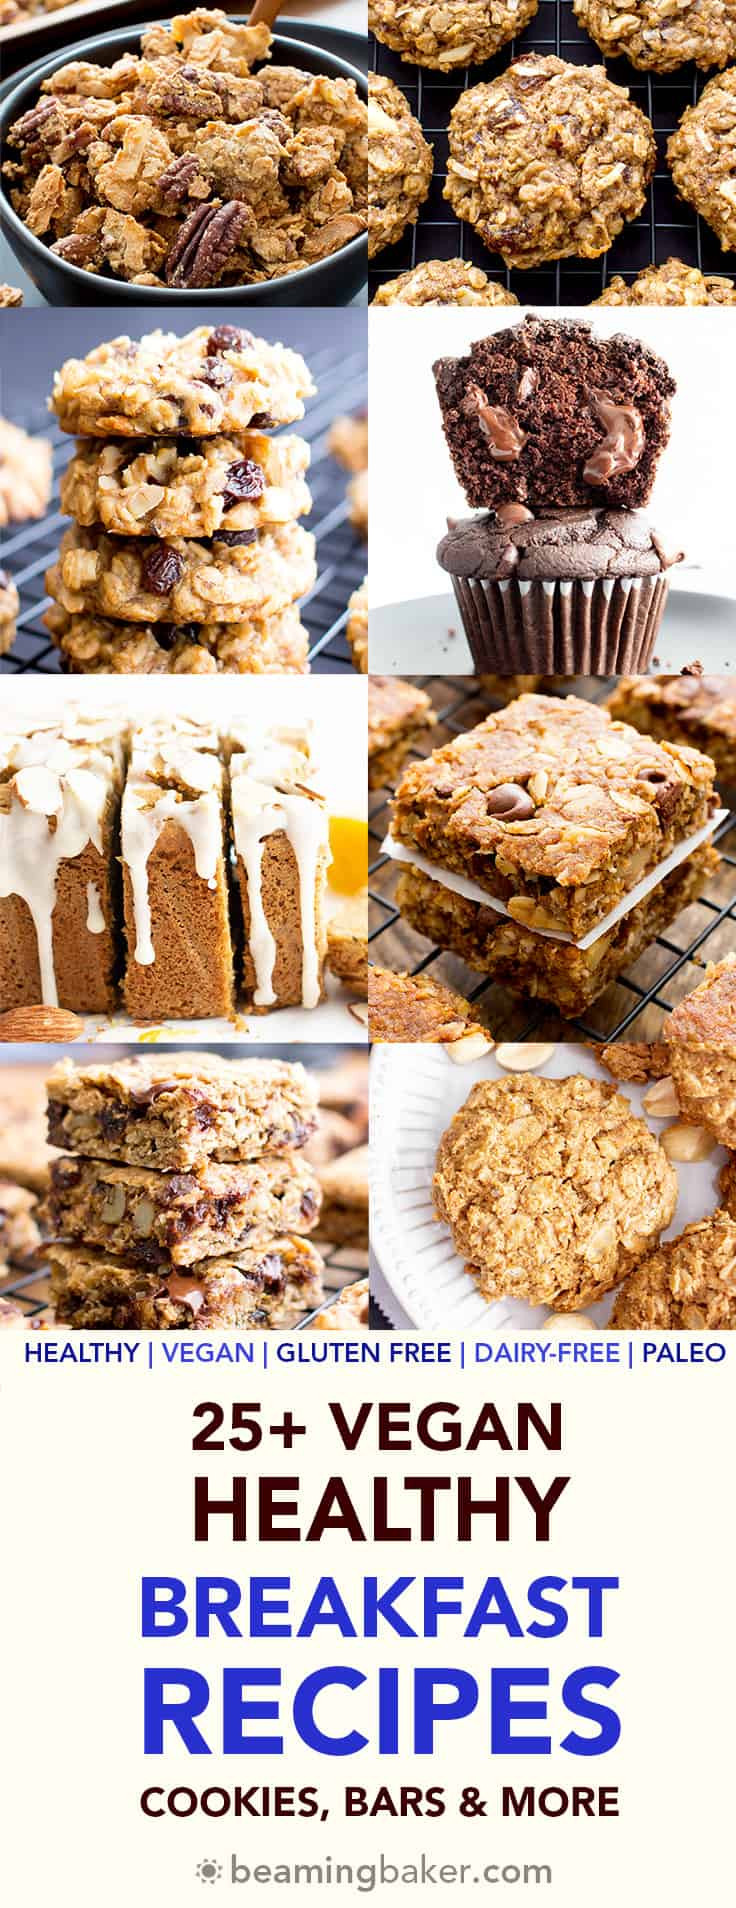 Healthy Breakfast Cookies And Bars
 25 Healthy Breakfast Cookies and Bars Recipes More